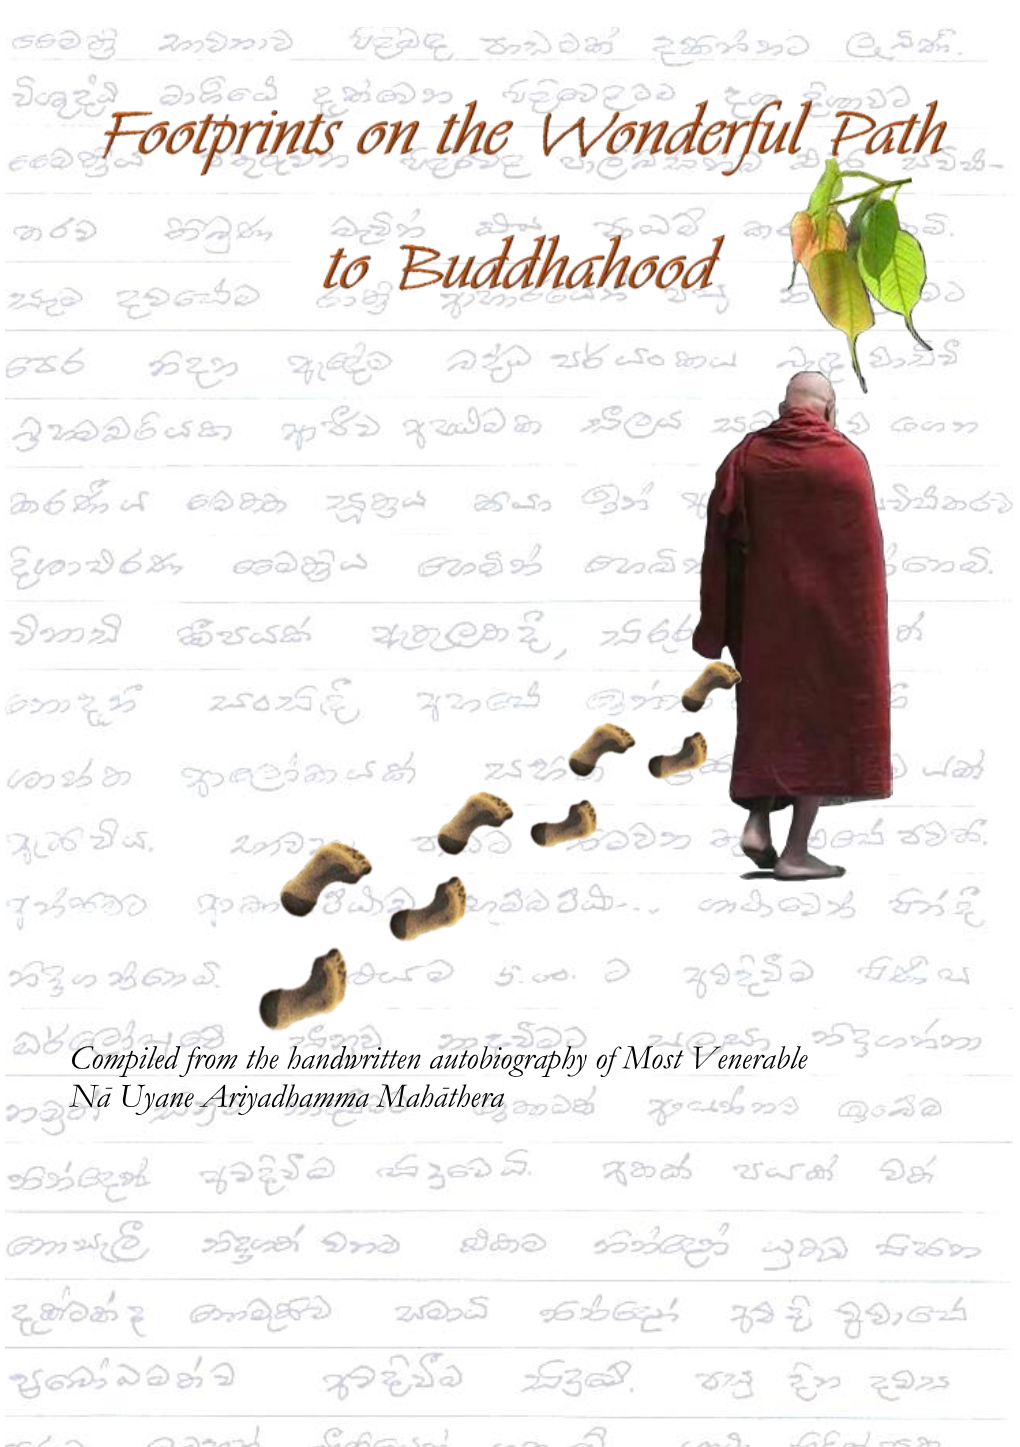 Footprintst on the Wonderful Path to Buddhahood